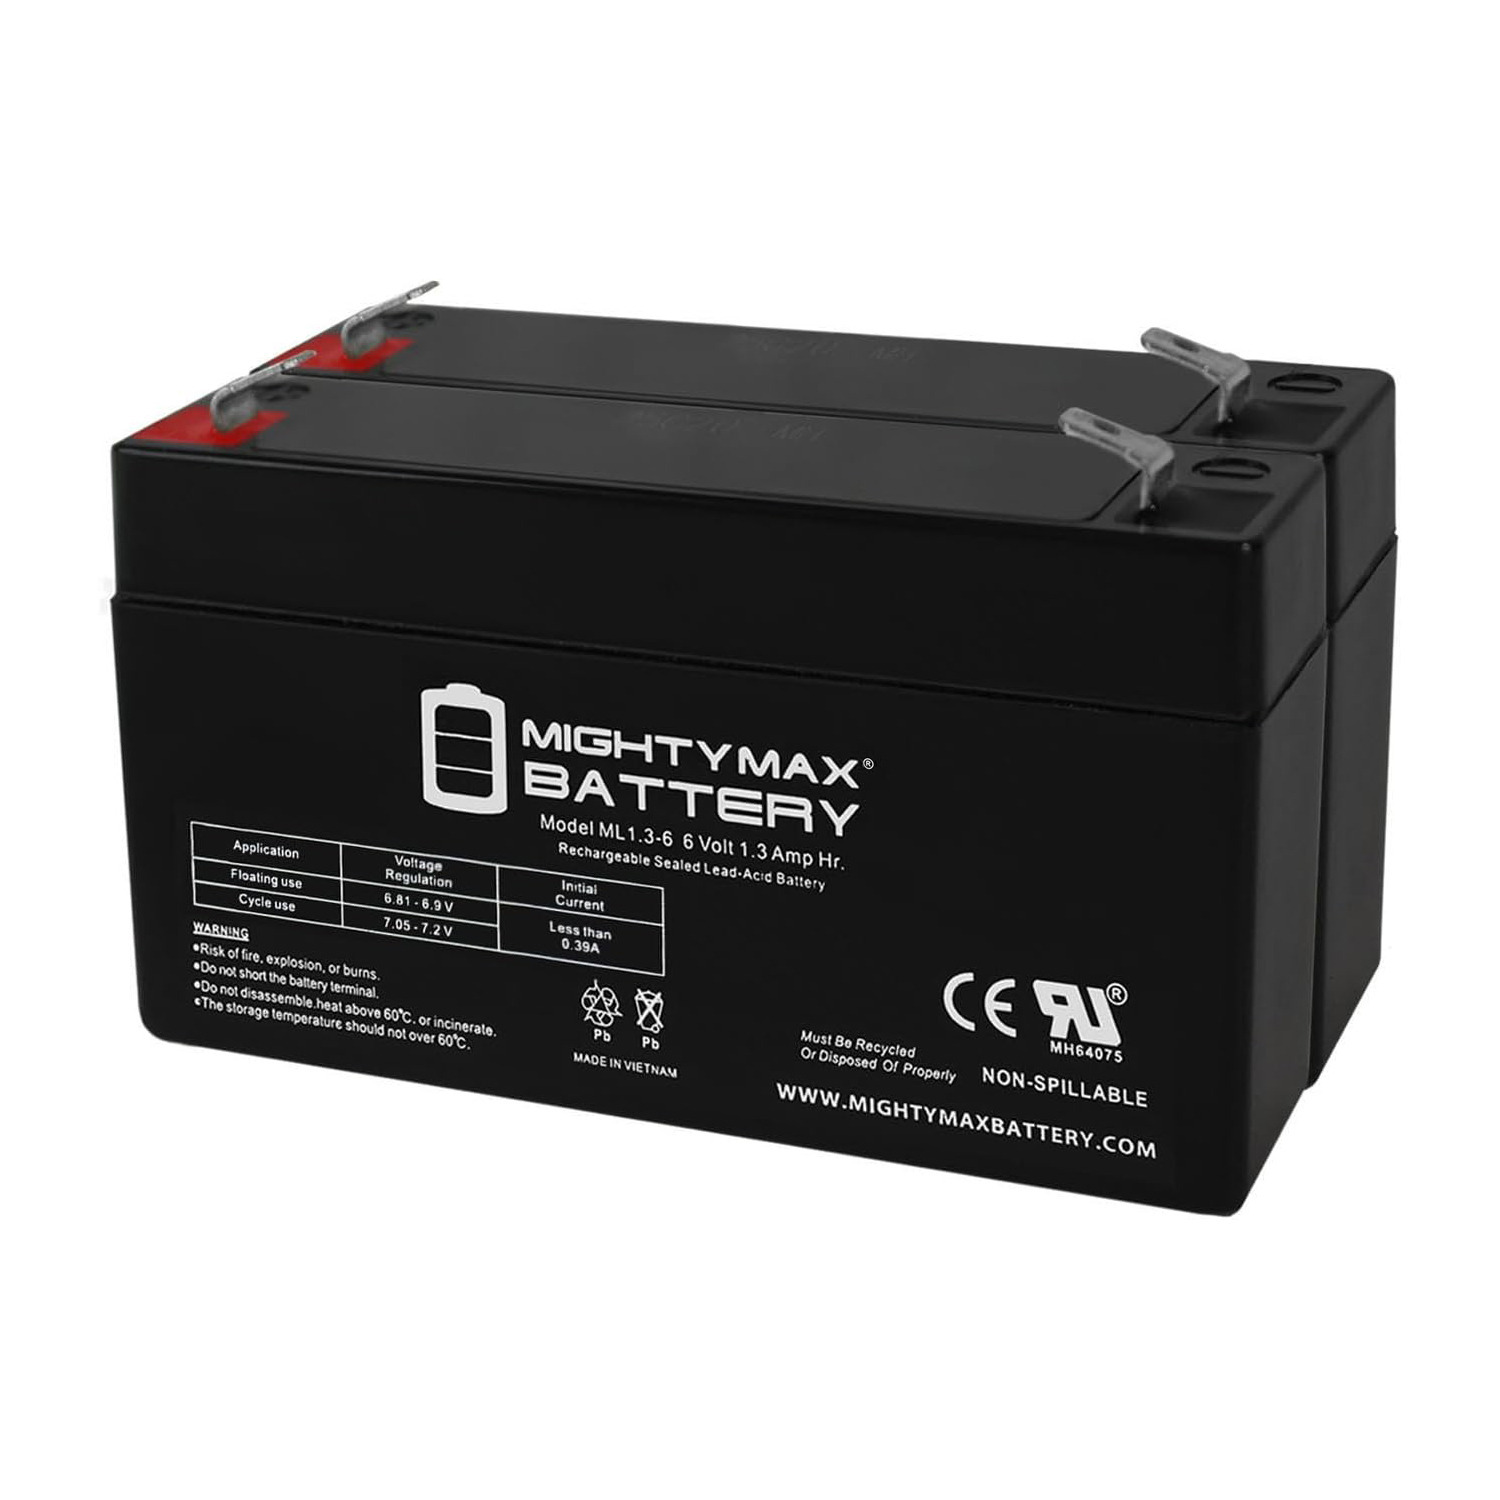 6V 1.3Ah SLA Replacement Battery for Newark NP1.2-6 - 2 Pack